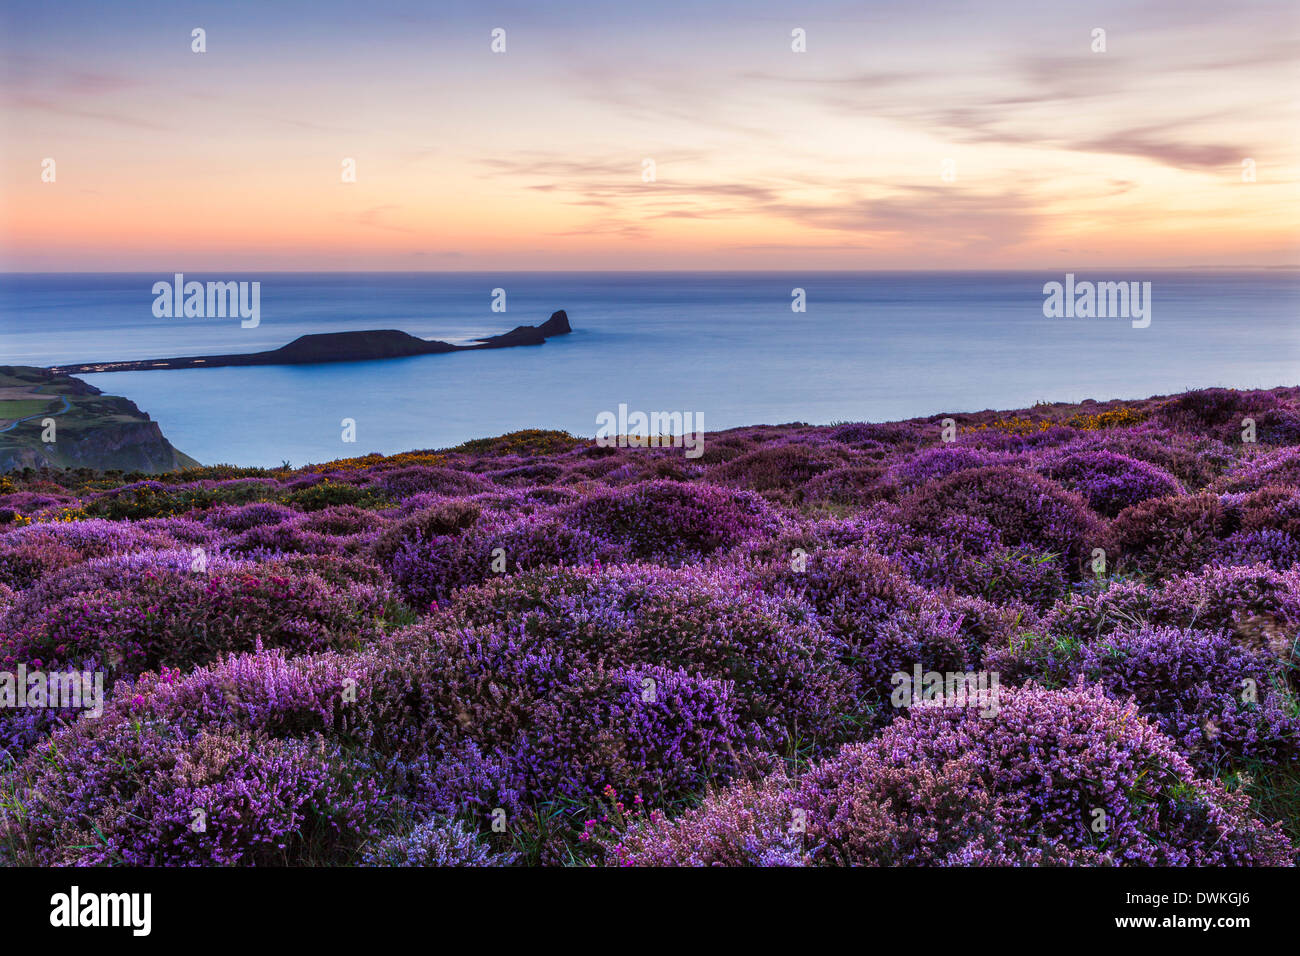 Rhossili Bay, Worms End, Gower Peninsula, Wales, United Kingdom, Europe Stock Photo